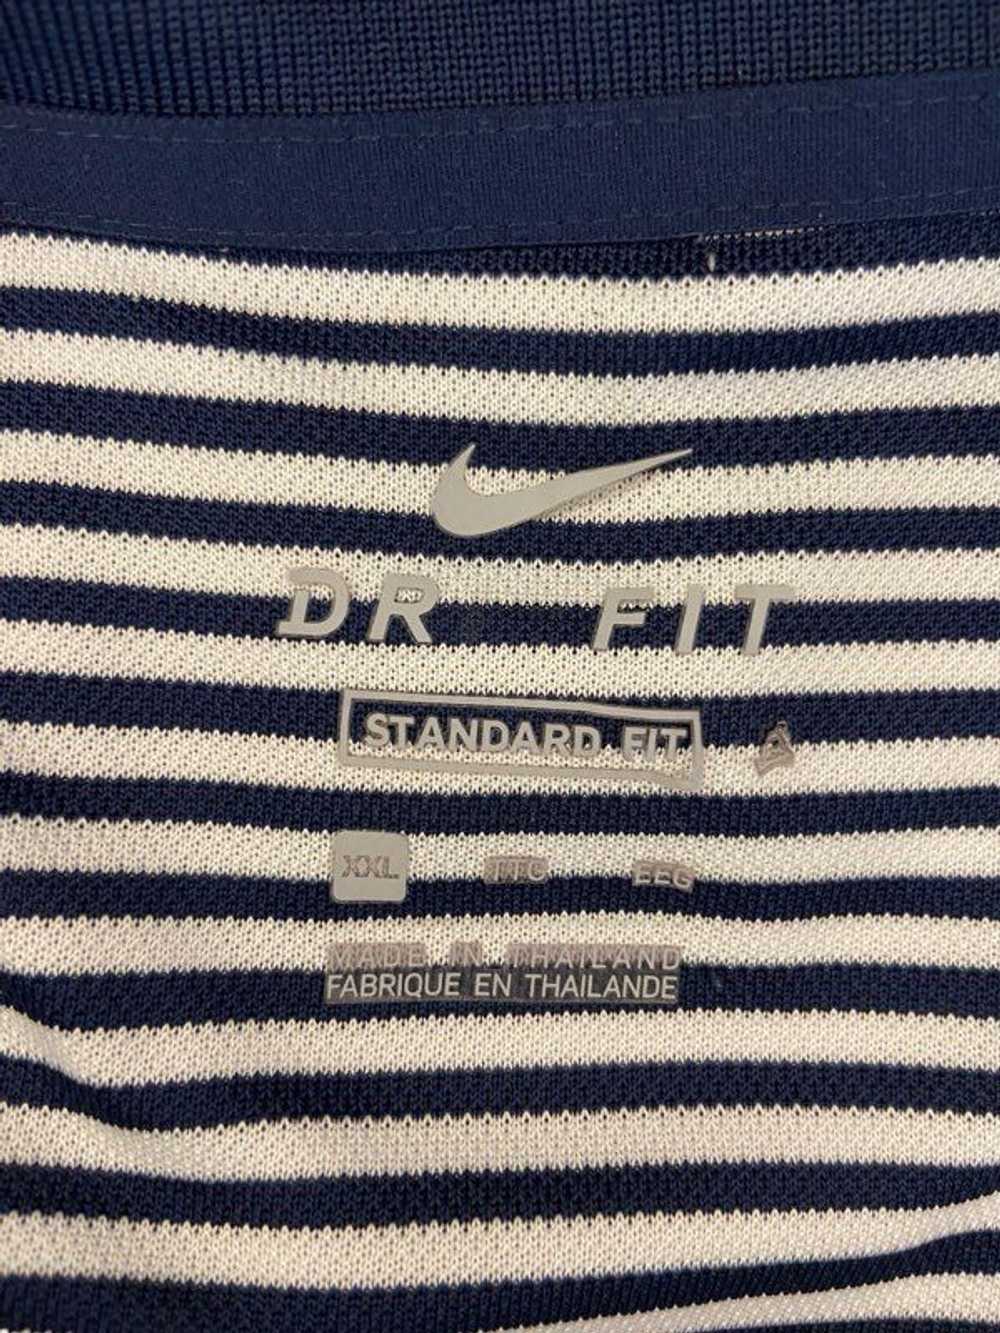 Nike Dri Fit Blue Striped Shirt - Size XXL - image 5